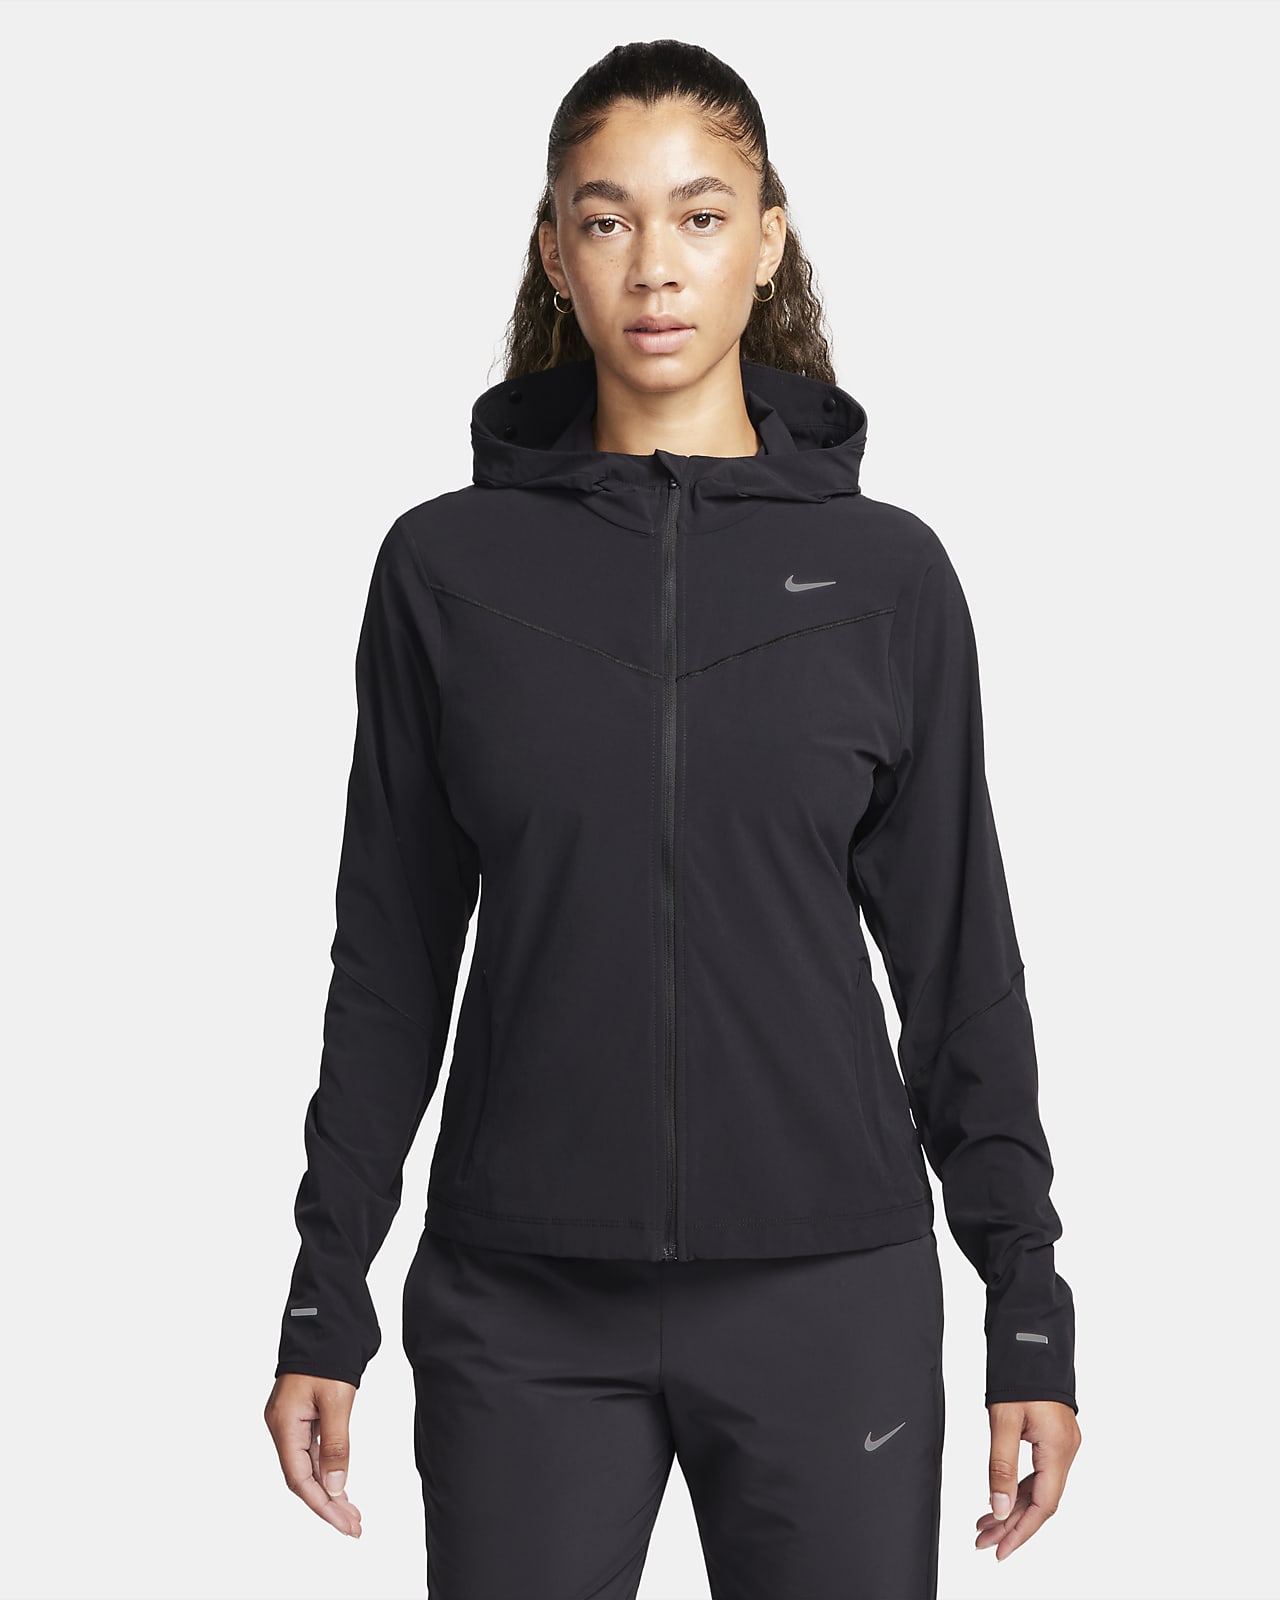 Nike Swift UV női futókabát